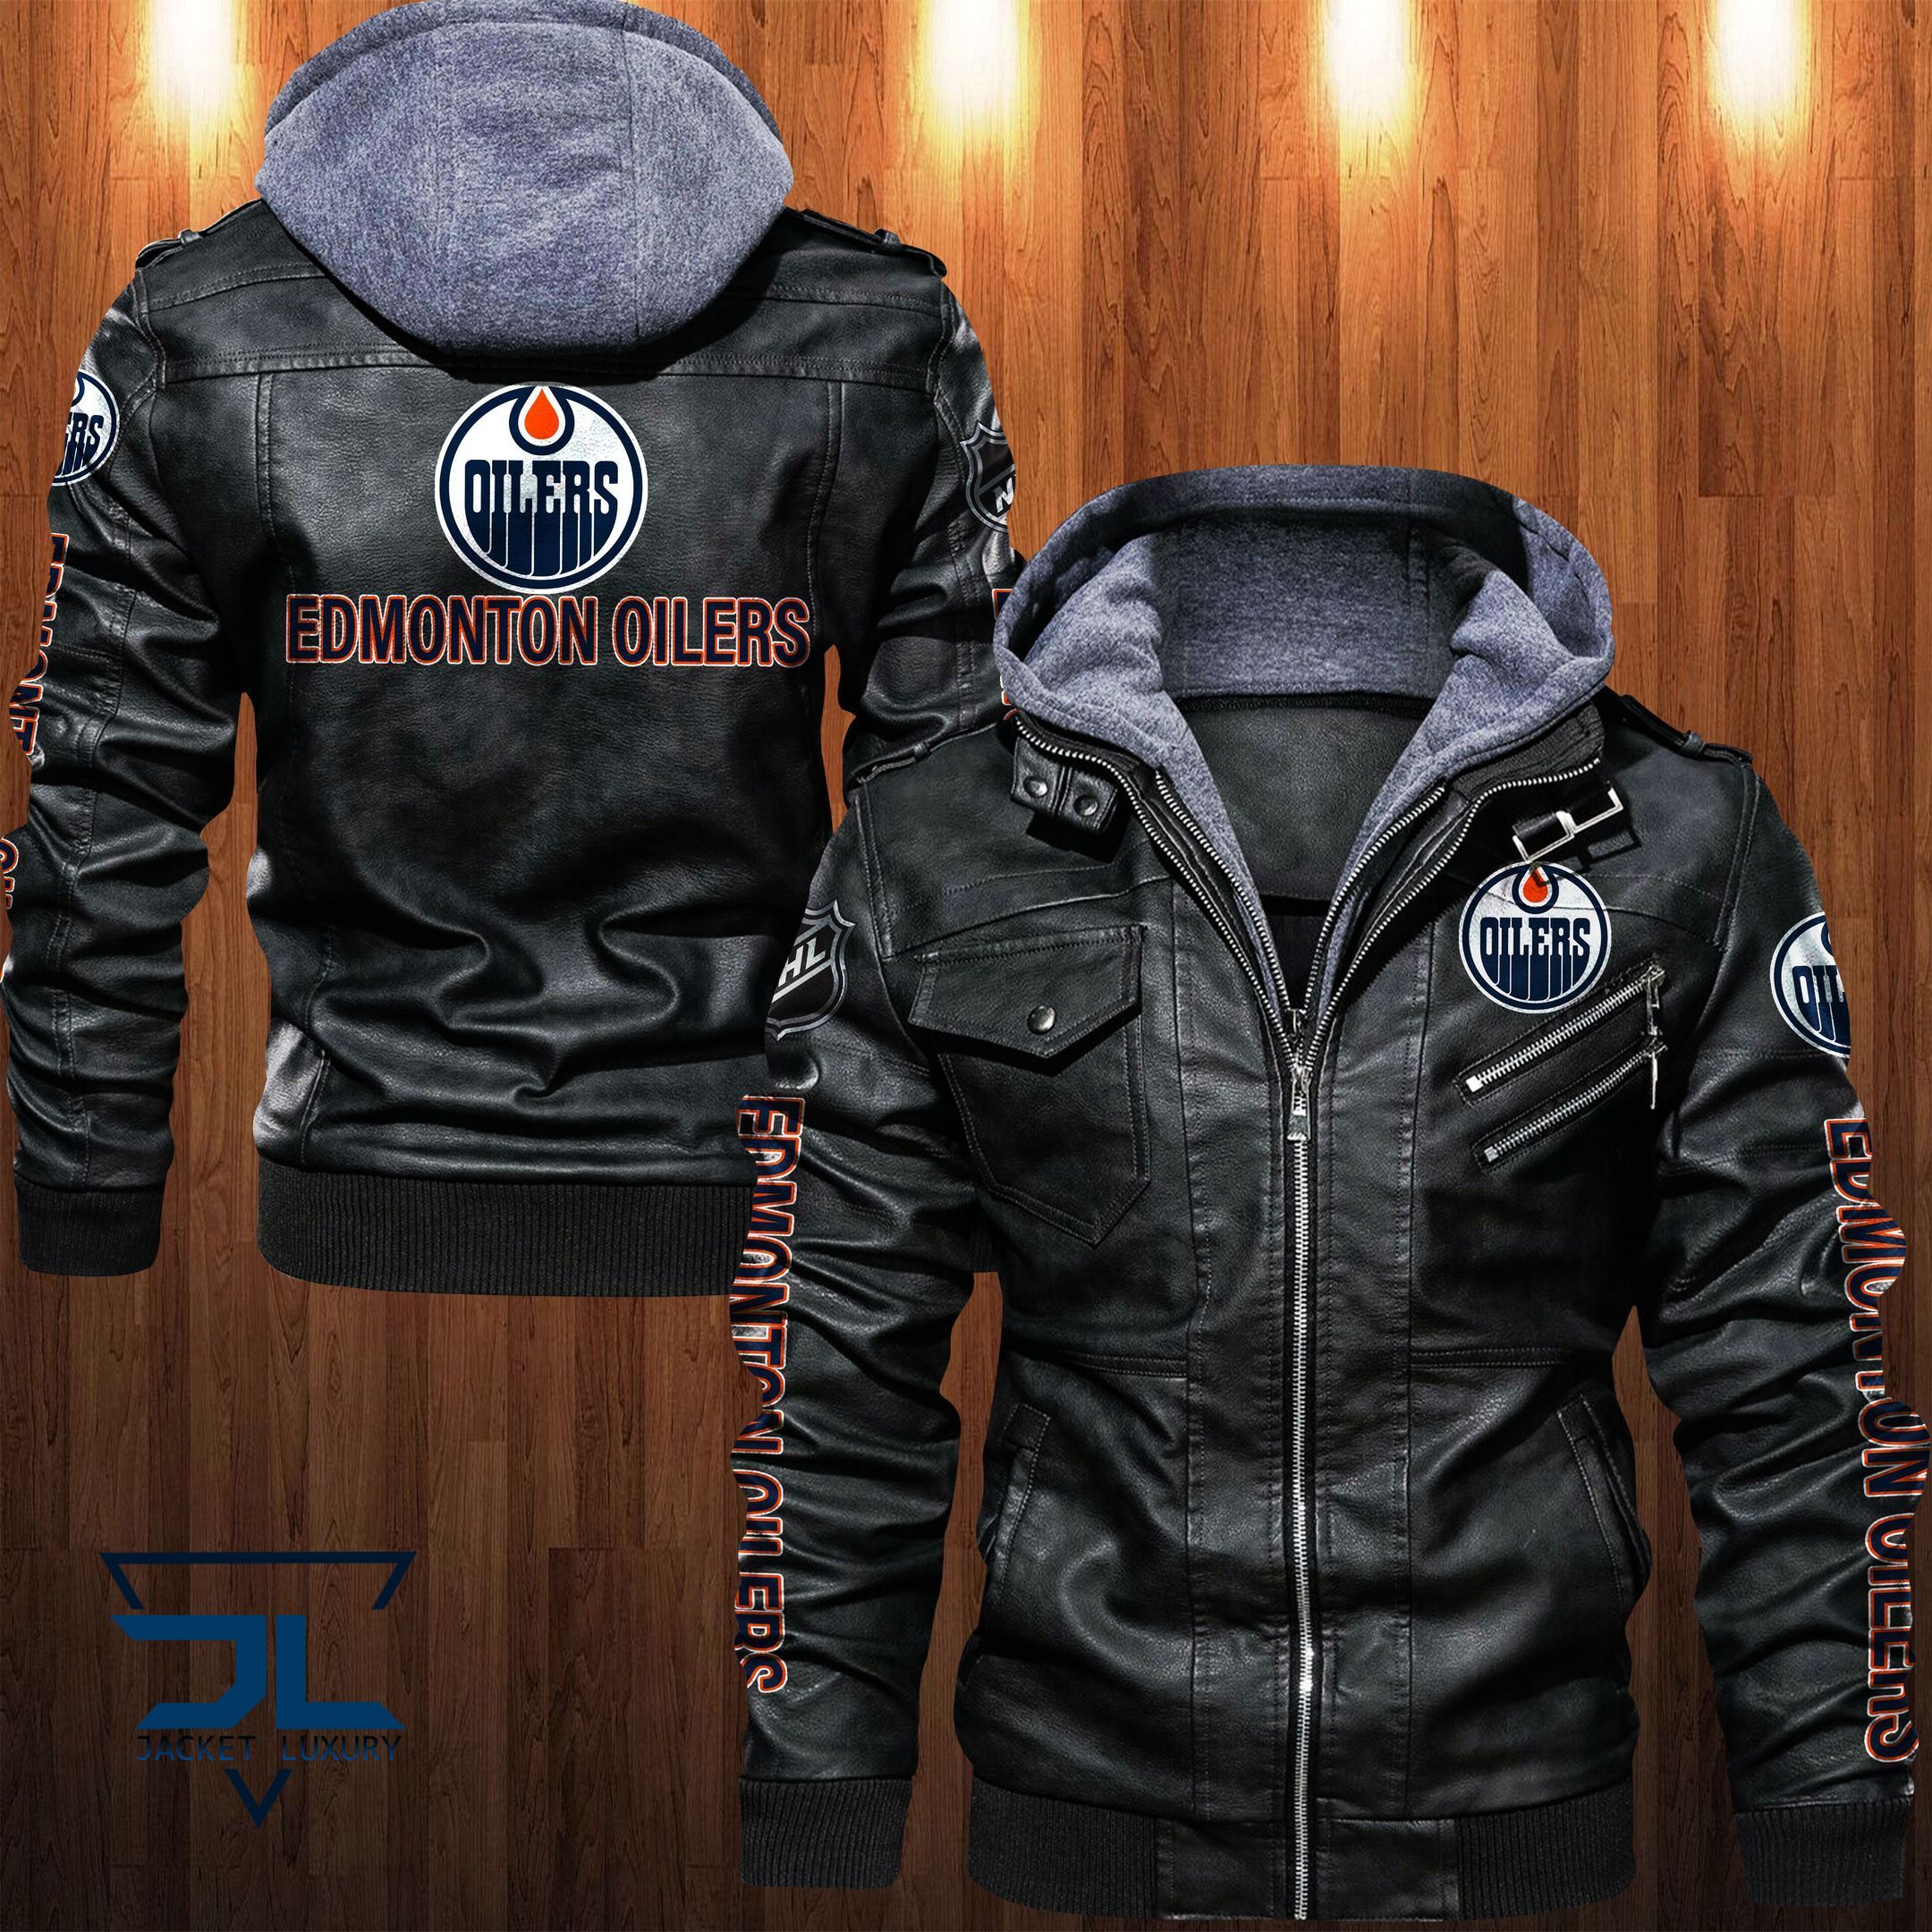 What Leather jacket Sells Best on Techcomshop? 190